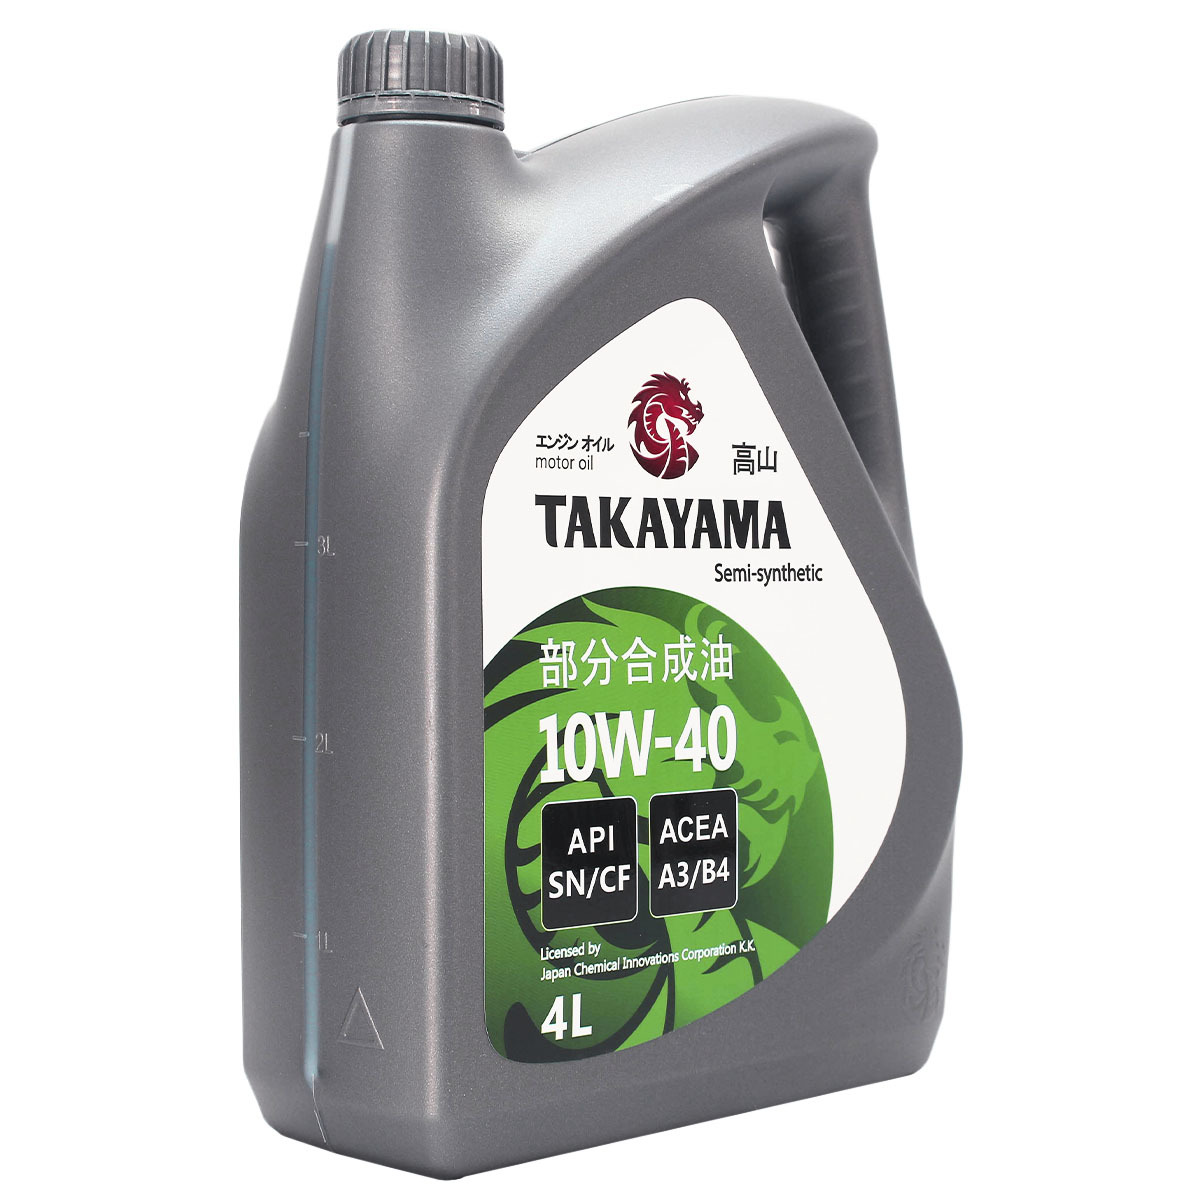 Моторное масло takayama 5w 40. Масло моторное Takayama 10w-40 API SN/CF 4л (пластик). Масло Такаяма 10w 40. Масло Такаяма 10w 40 отзывы. Takayama 10w 40 полусинтетика отзывы.